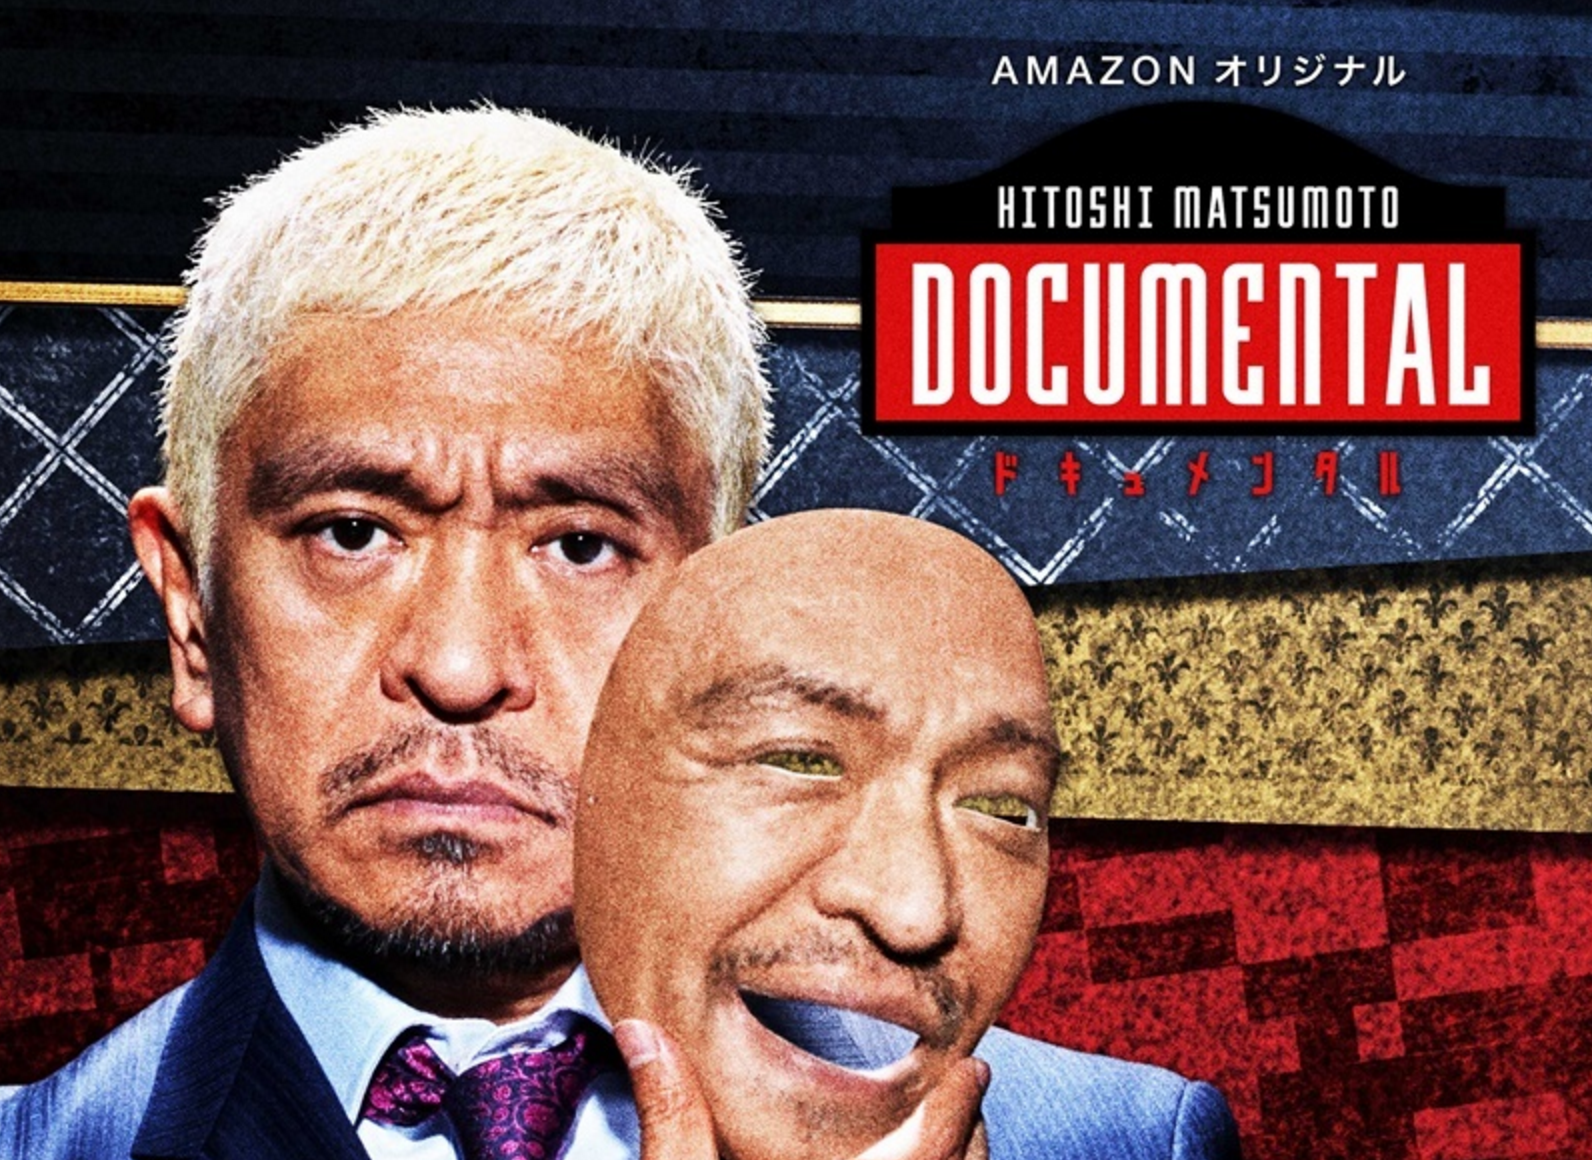 Amazonプライムビデオで松本人志のドキュメンタルが独占放送！参加費100万円、笑ったら即退場？